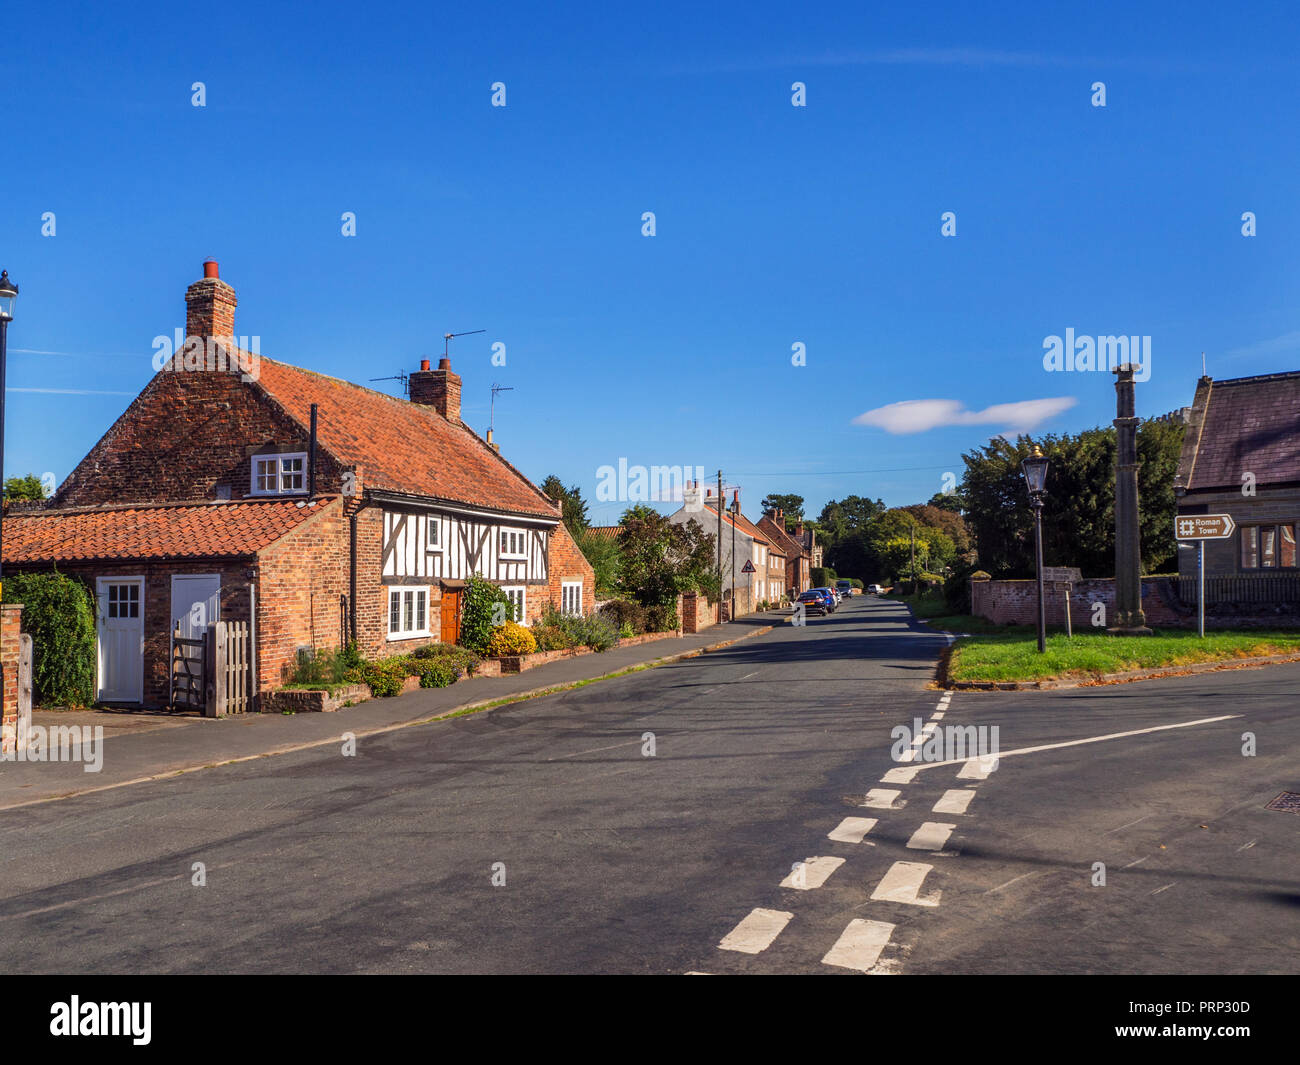 The village of Aldborough near Boroughbridge North Yorkshire England Stock Photo